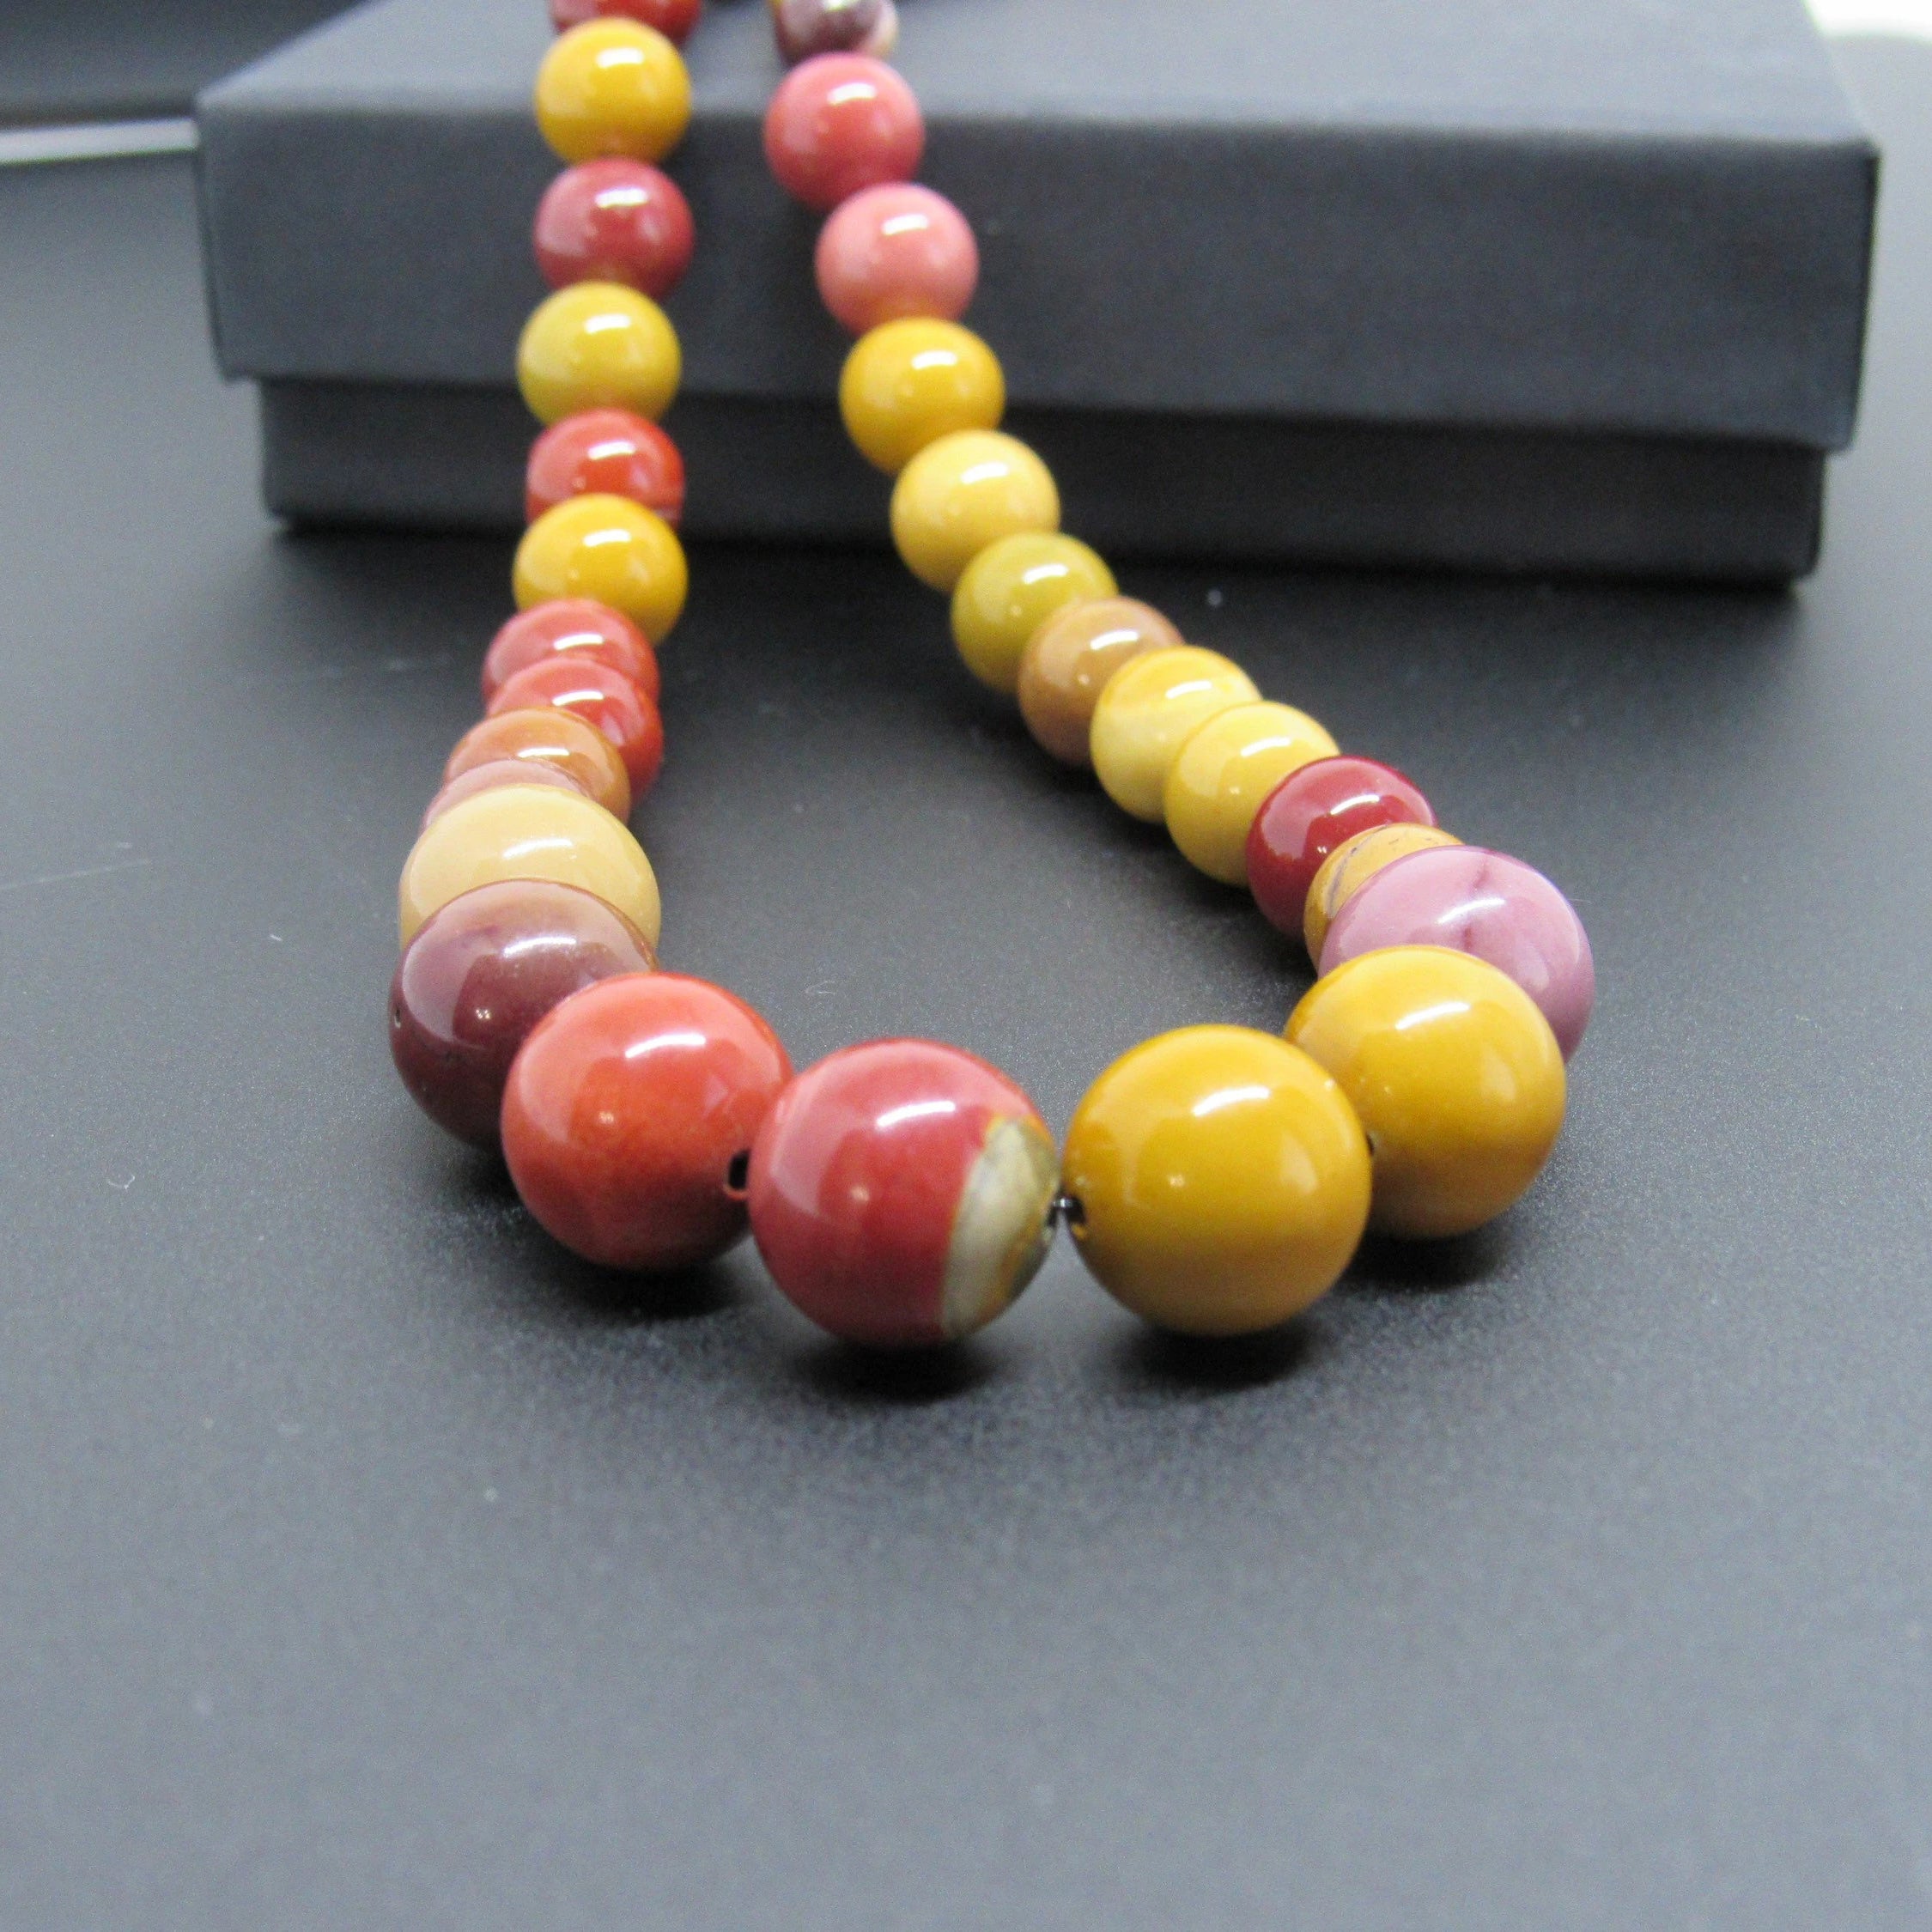 Beaded Necklace made with Beautiful Mookaite Jasper Gemstone Beads